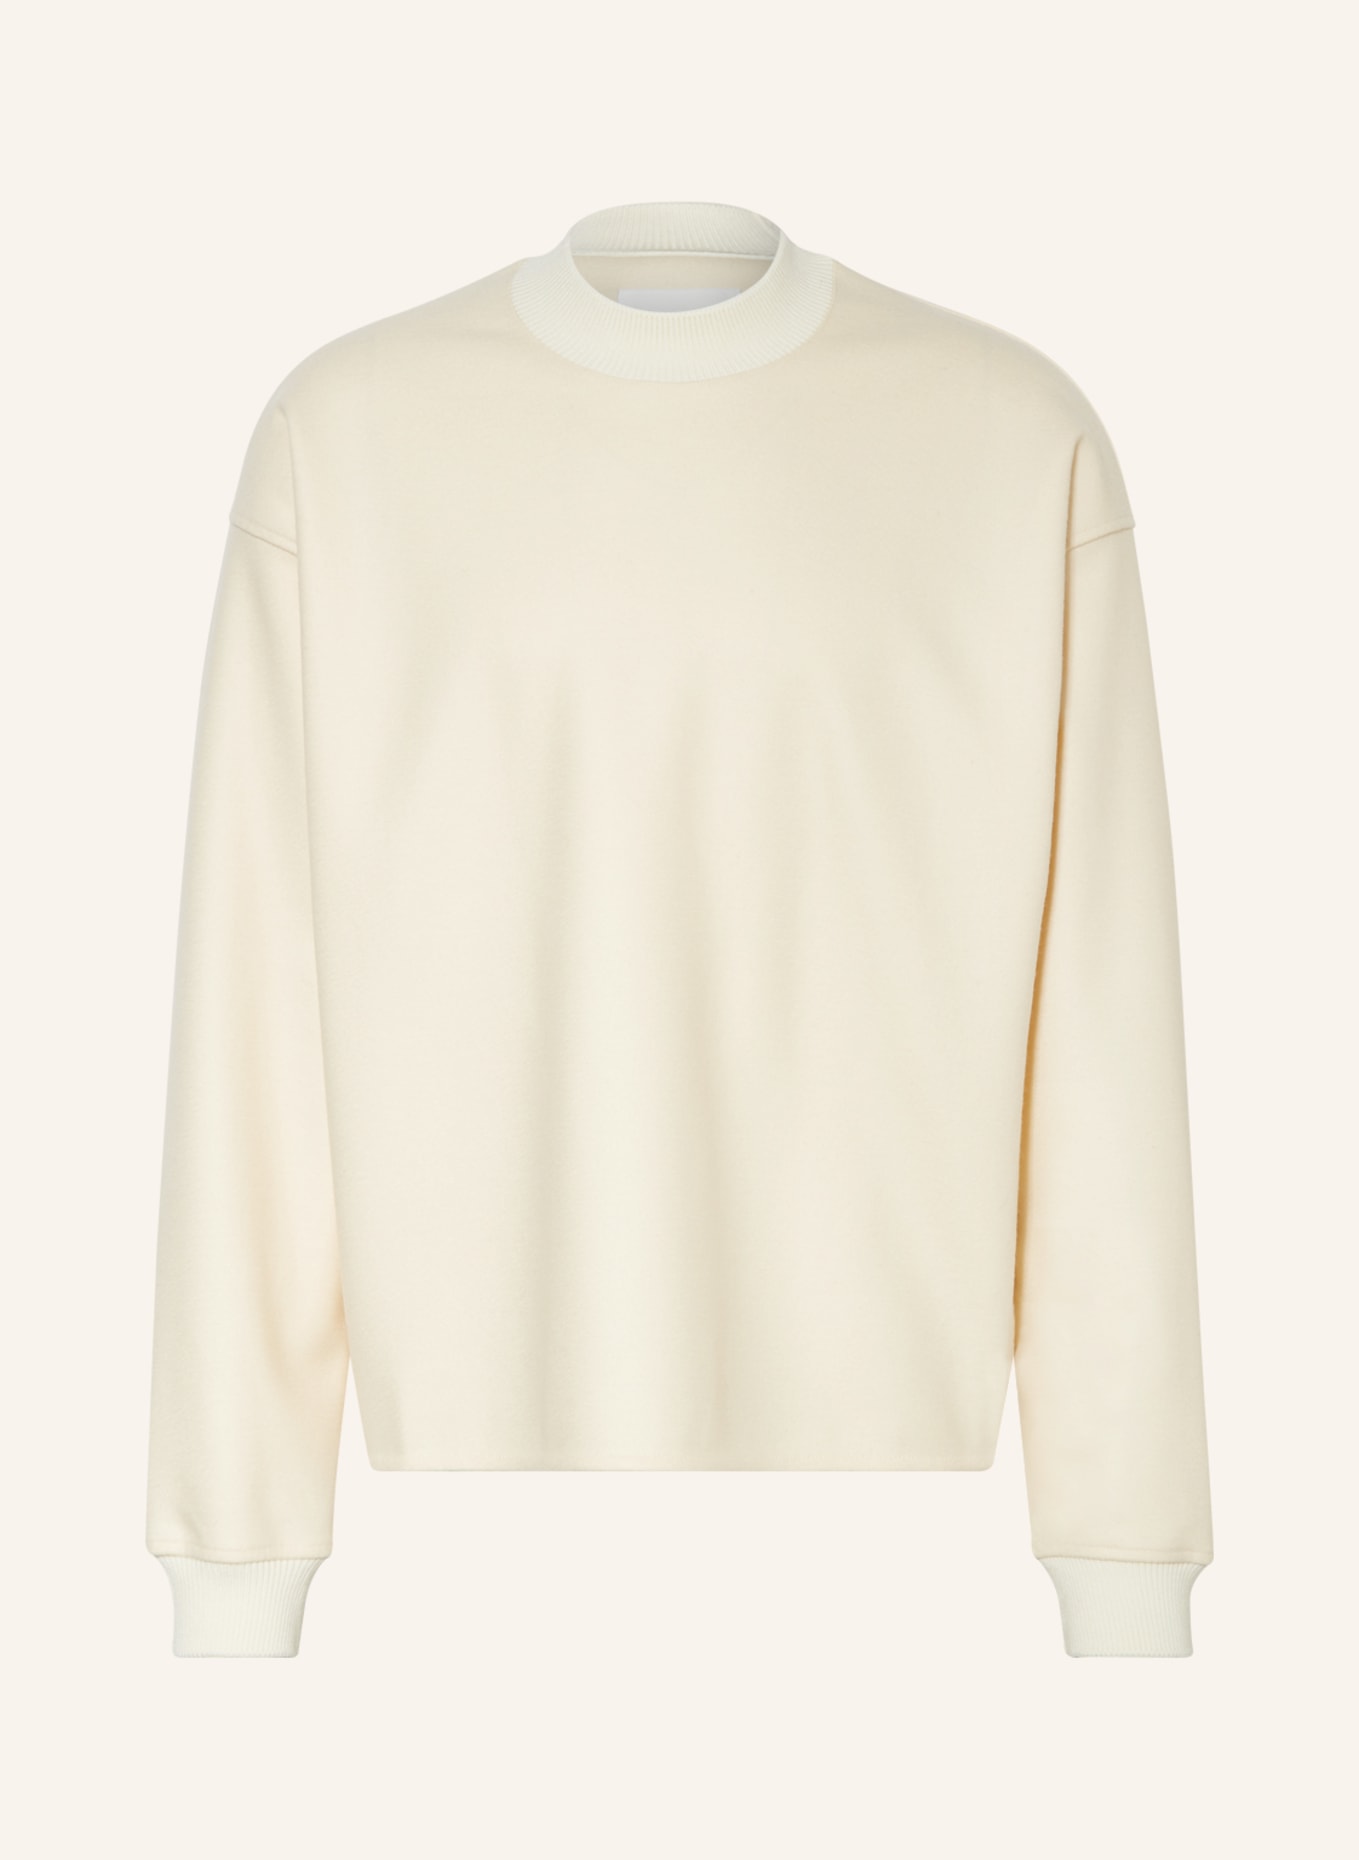 JIL SANDER Sweatshirt, Farbe: ECRU (Bild 1)